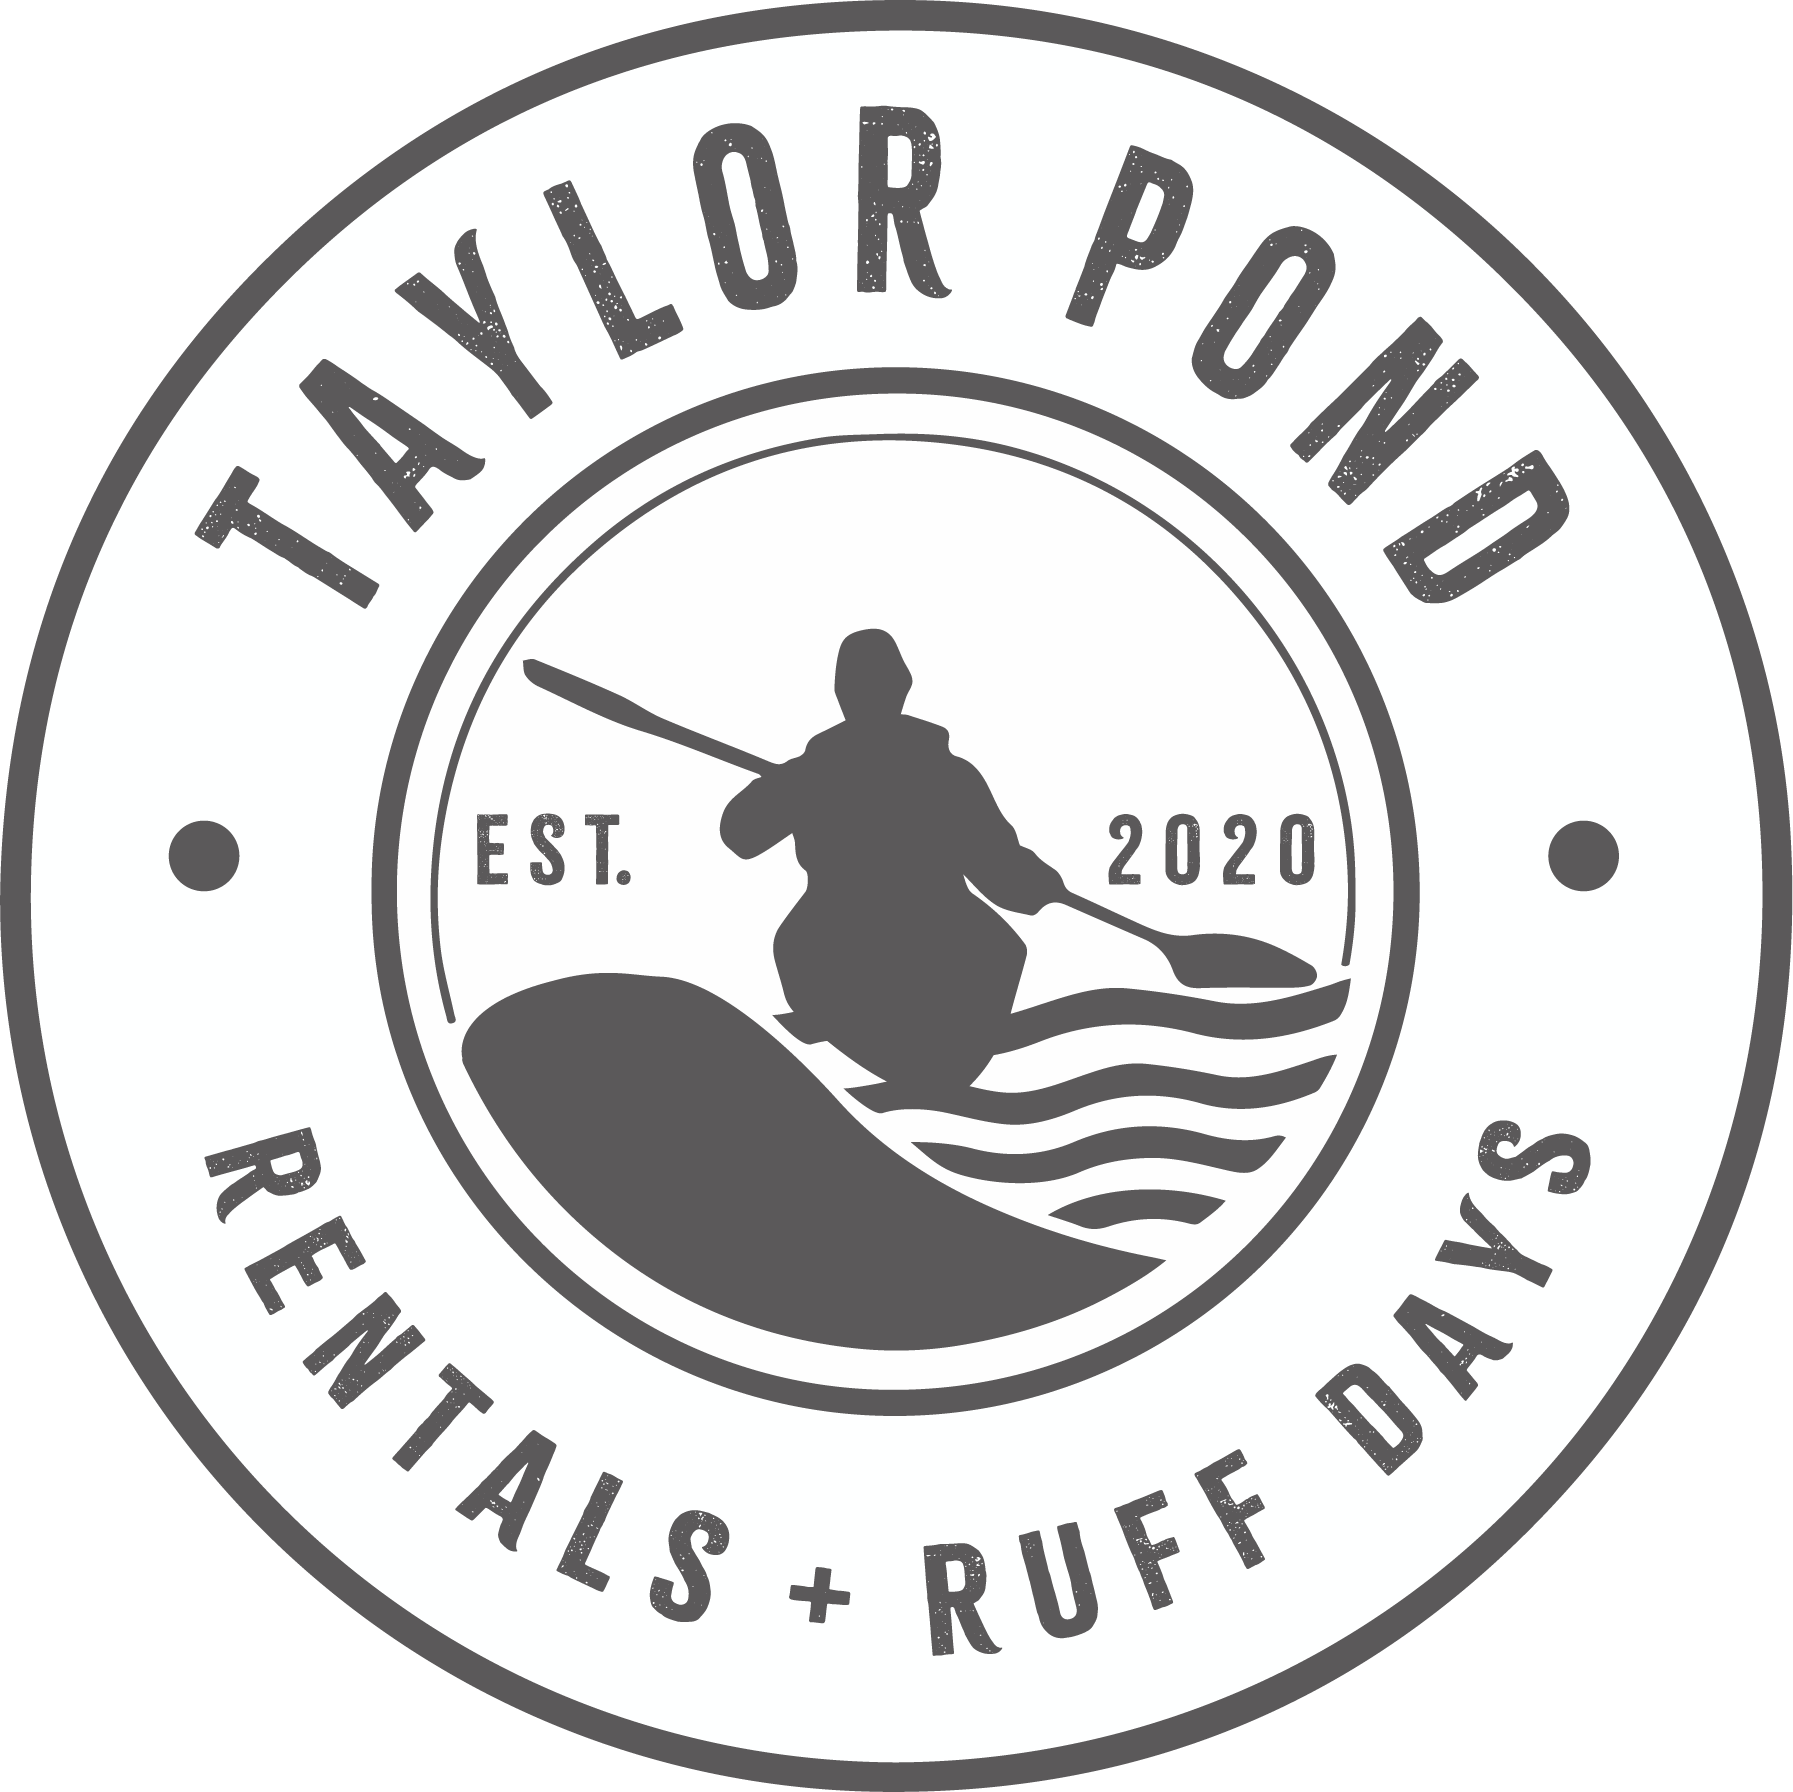 Taylor Pond Rentals